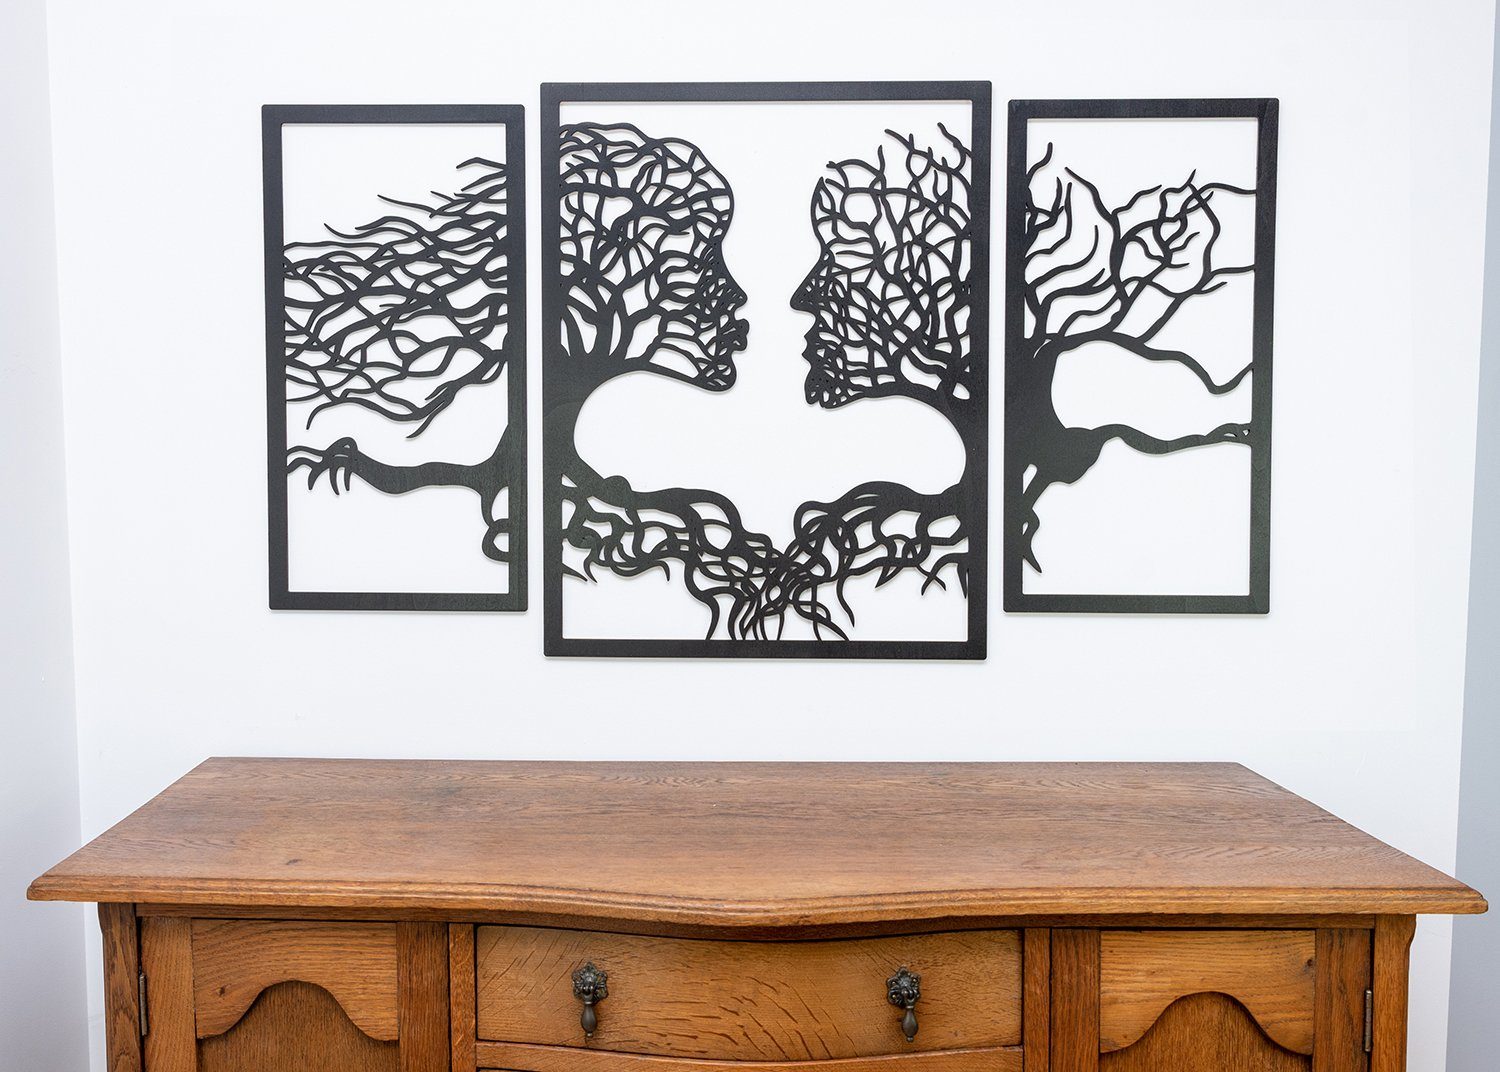 ORNAMENTI Holzbild 3D grosse Wandpaneel Wanddekoration, Handmade Baum, Gesichter